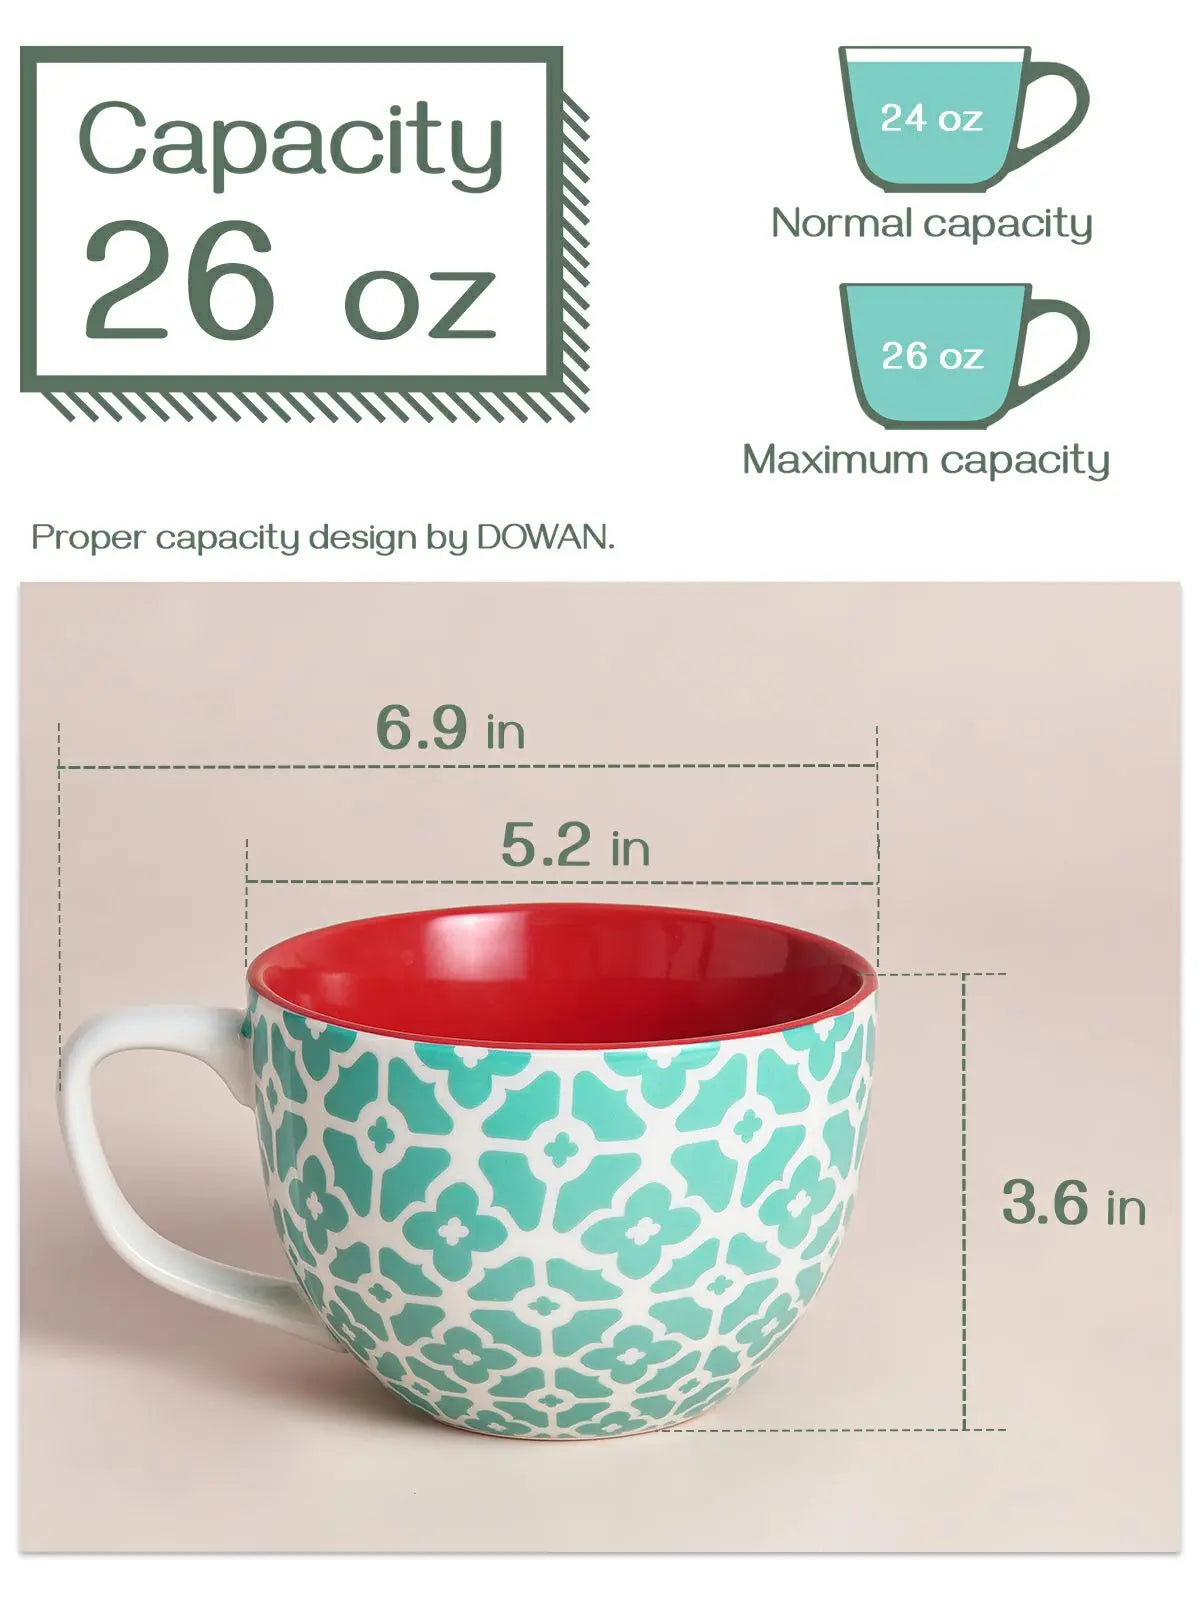 DOWAN Coffee Mug, 24 oz Large Coffee Mug with Coaster for Coffee